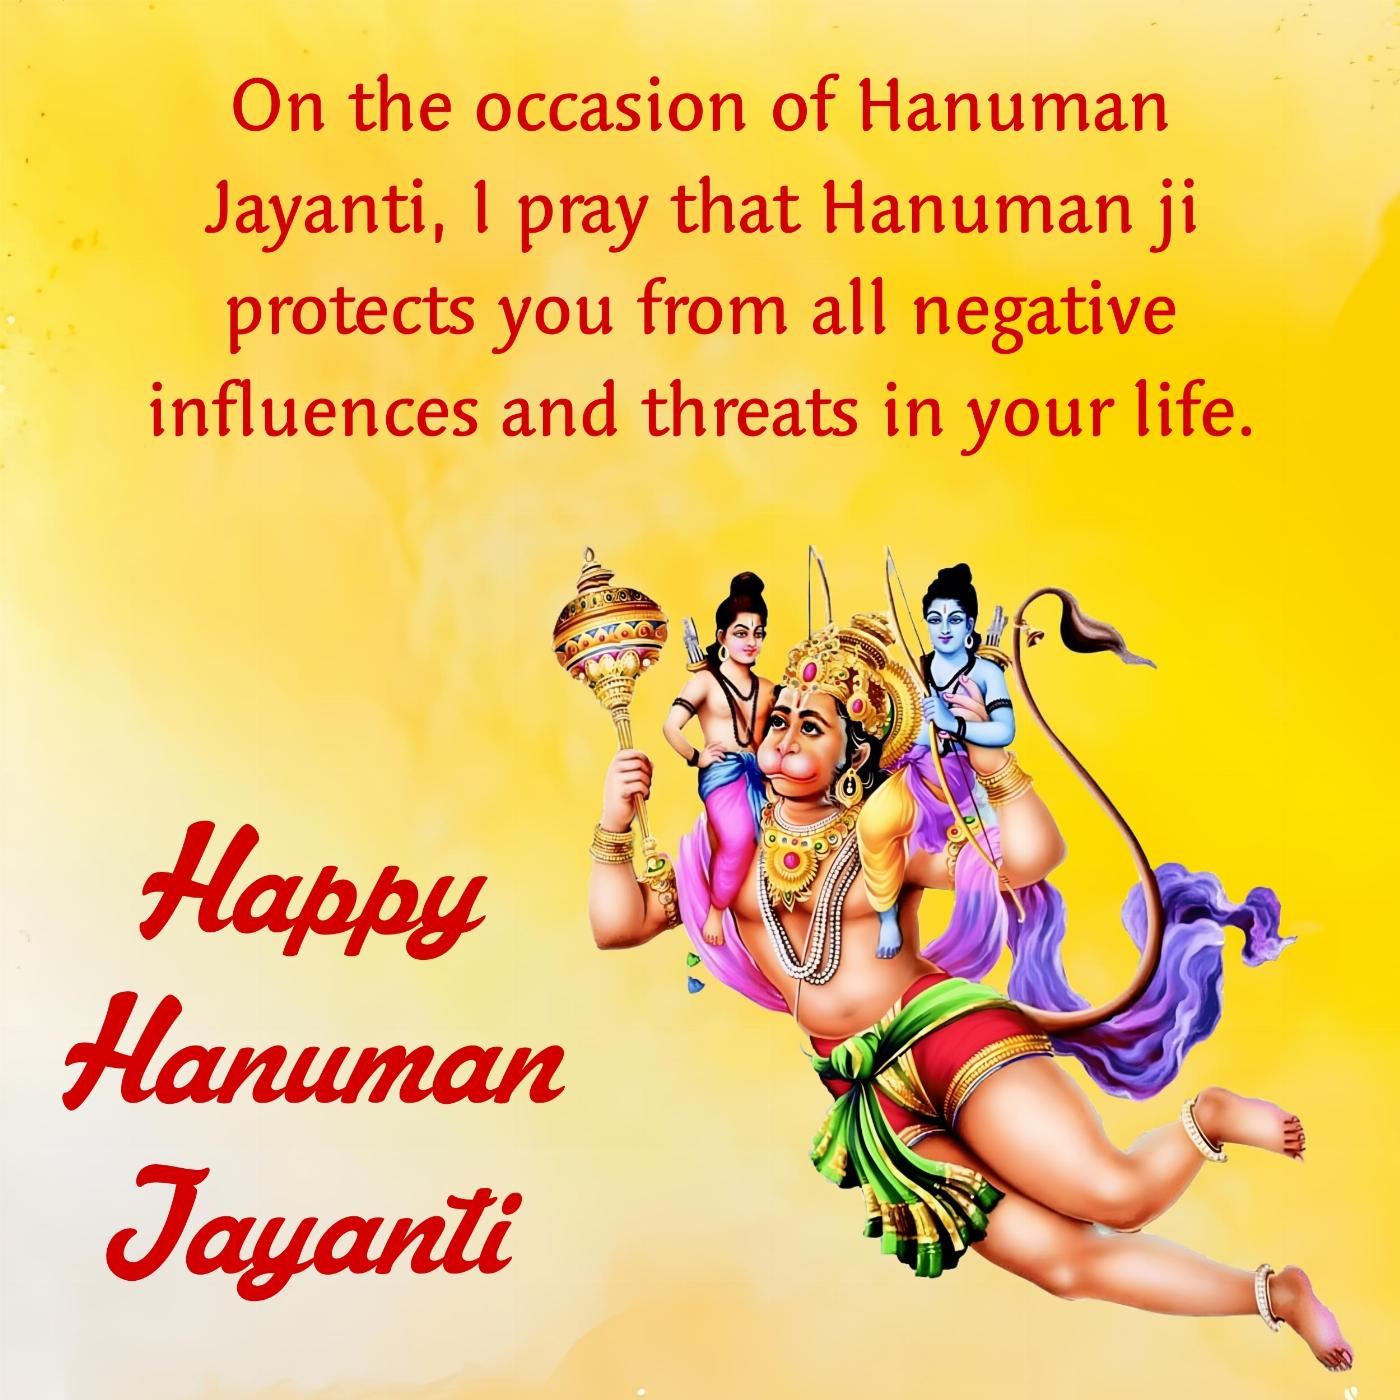 On the occasion of Hanuman Jayanti I pray that Hanuman ji